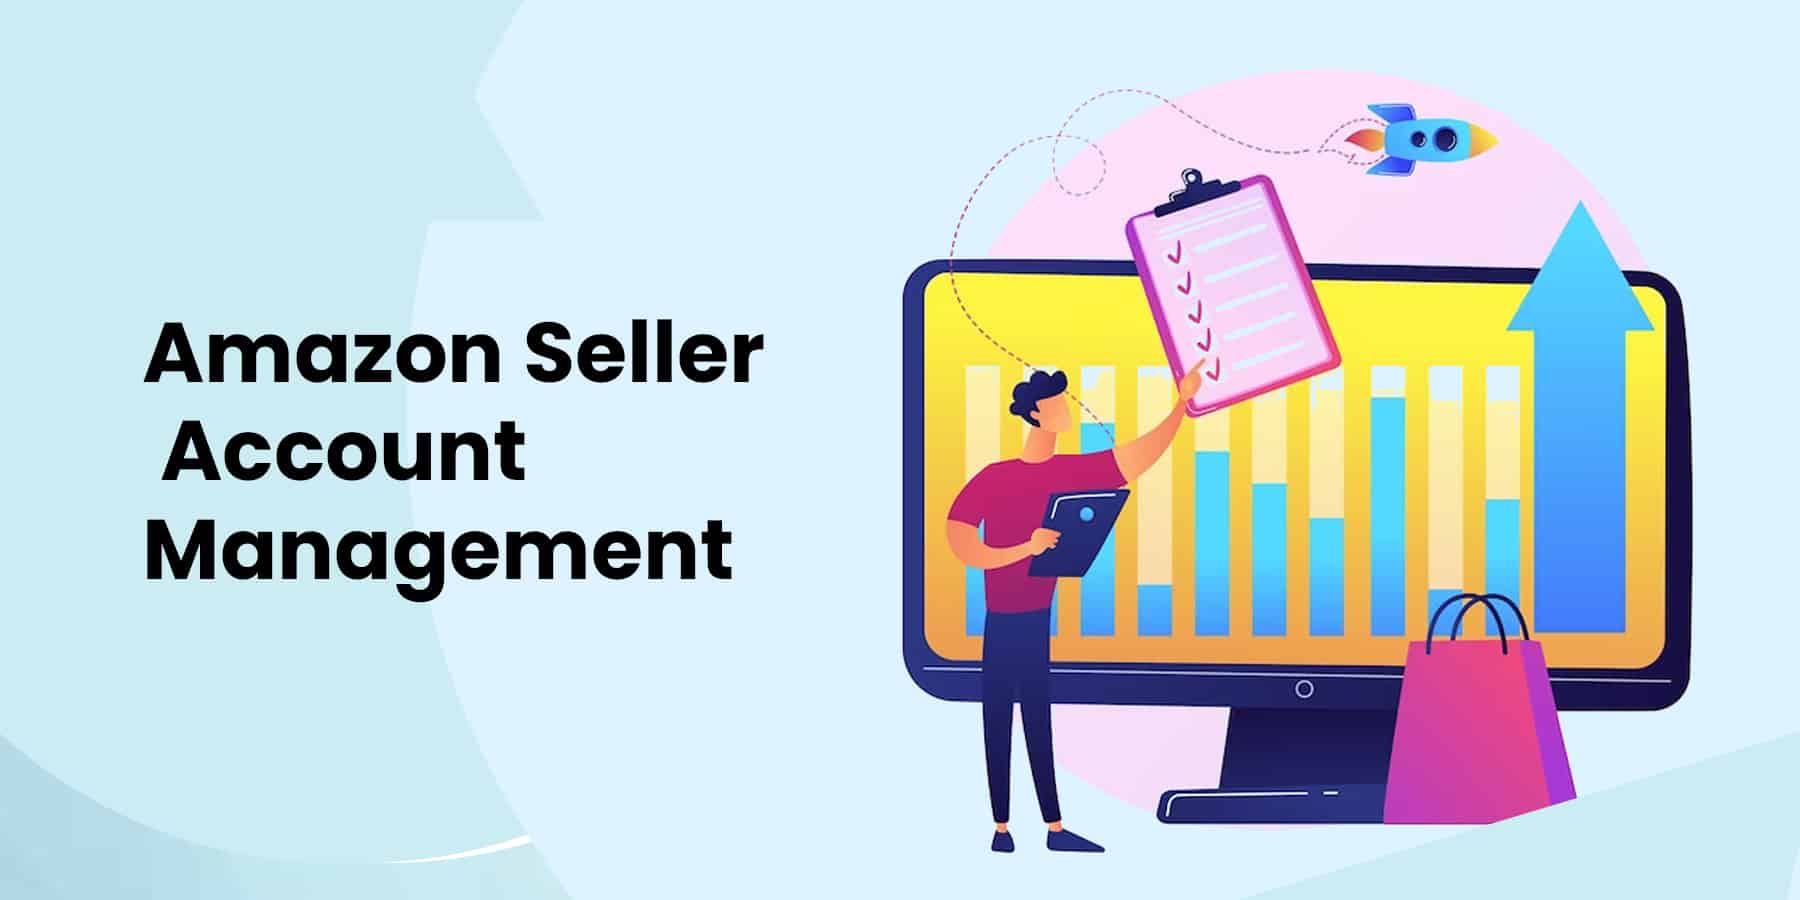 Amazon Seller Account Management